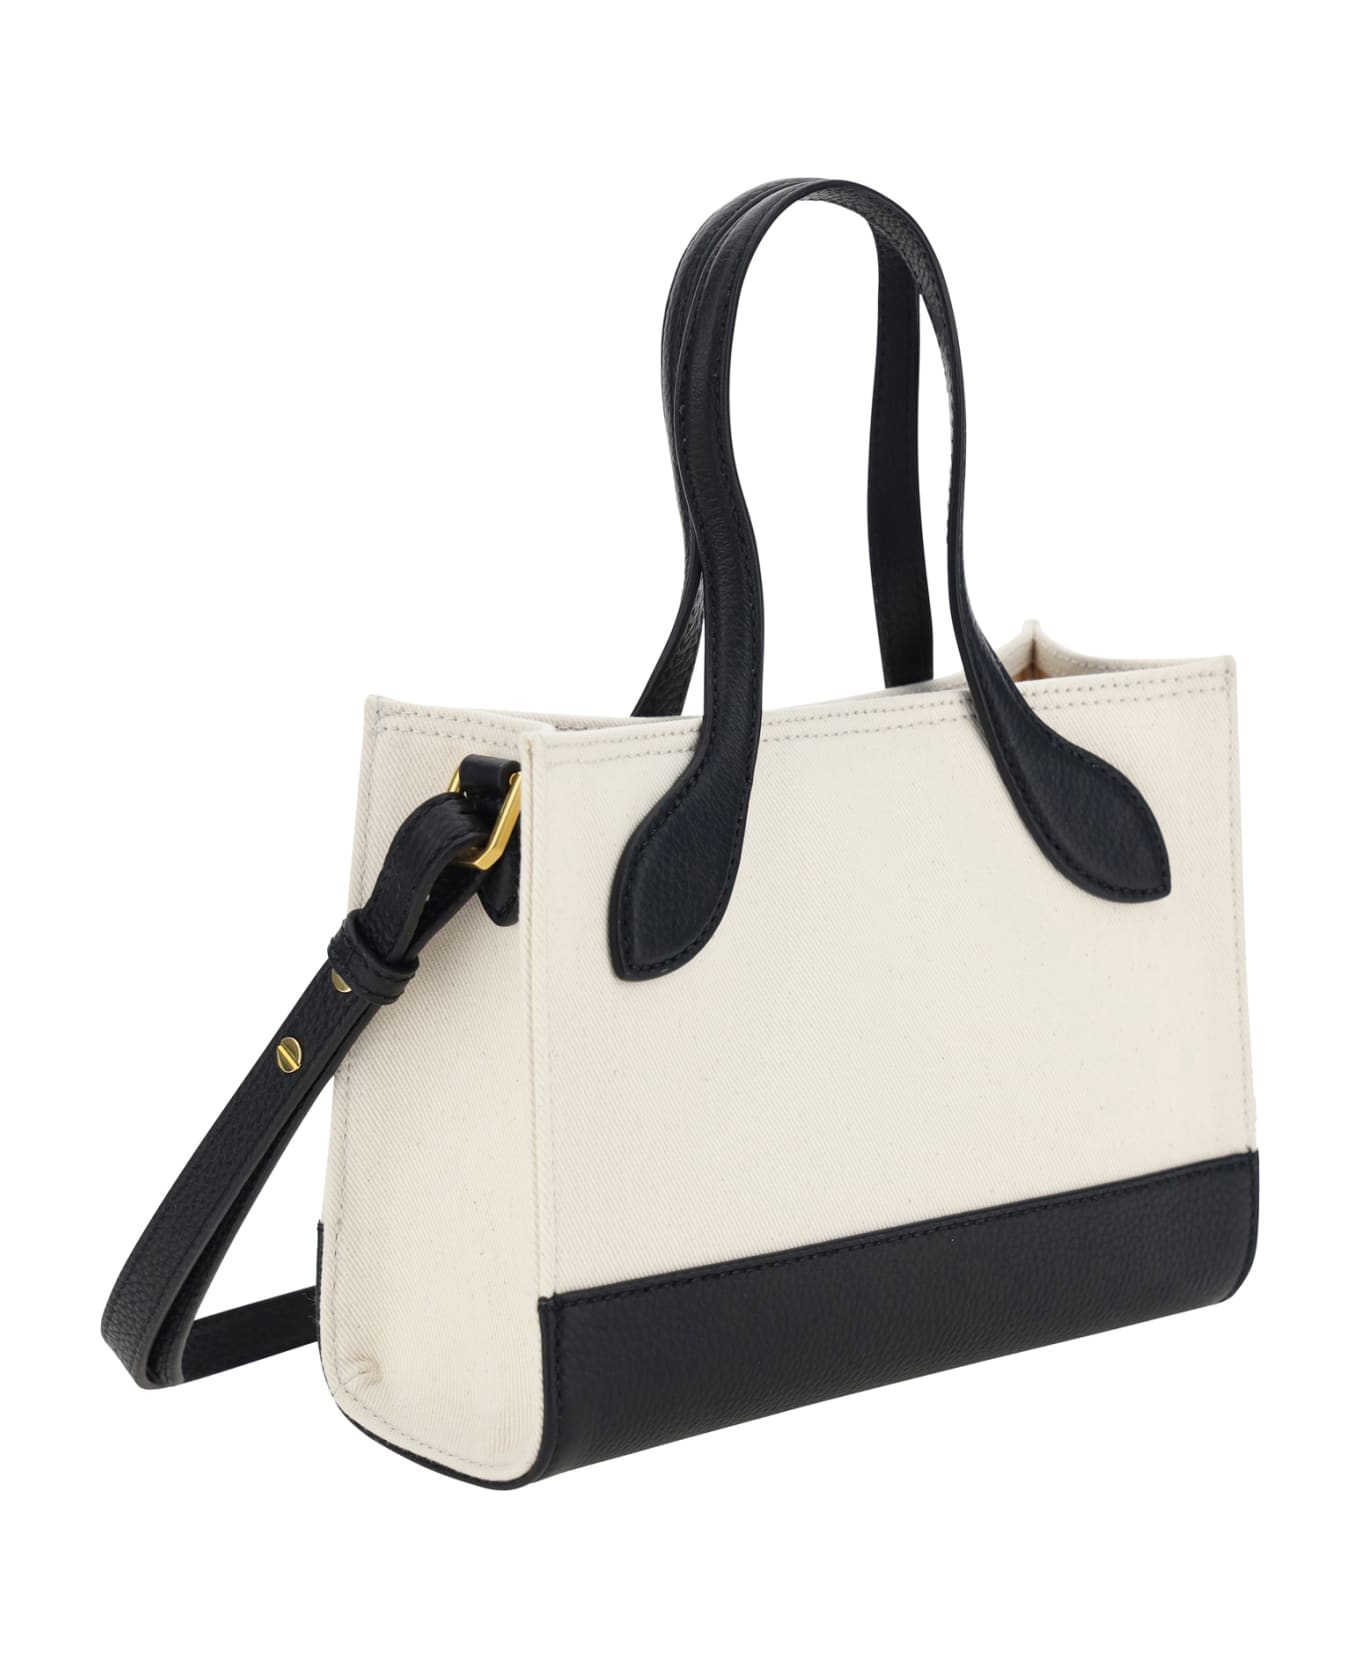 Bally Mini Handbag - White